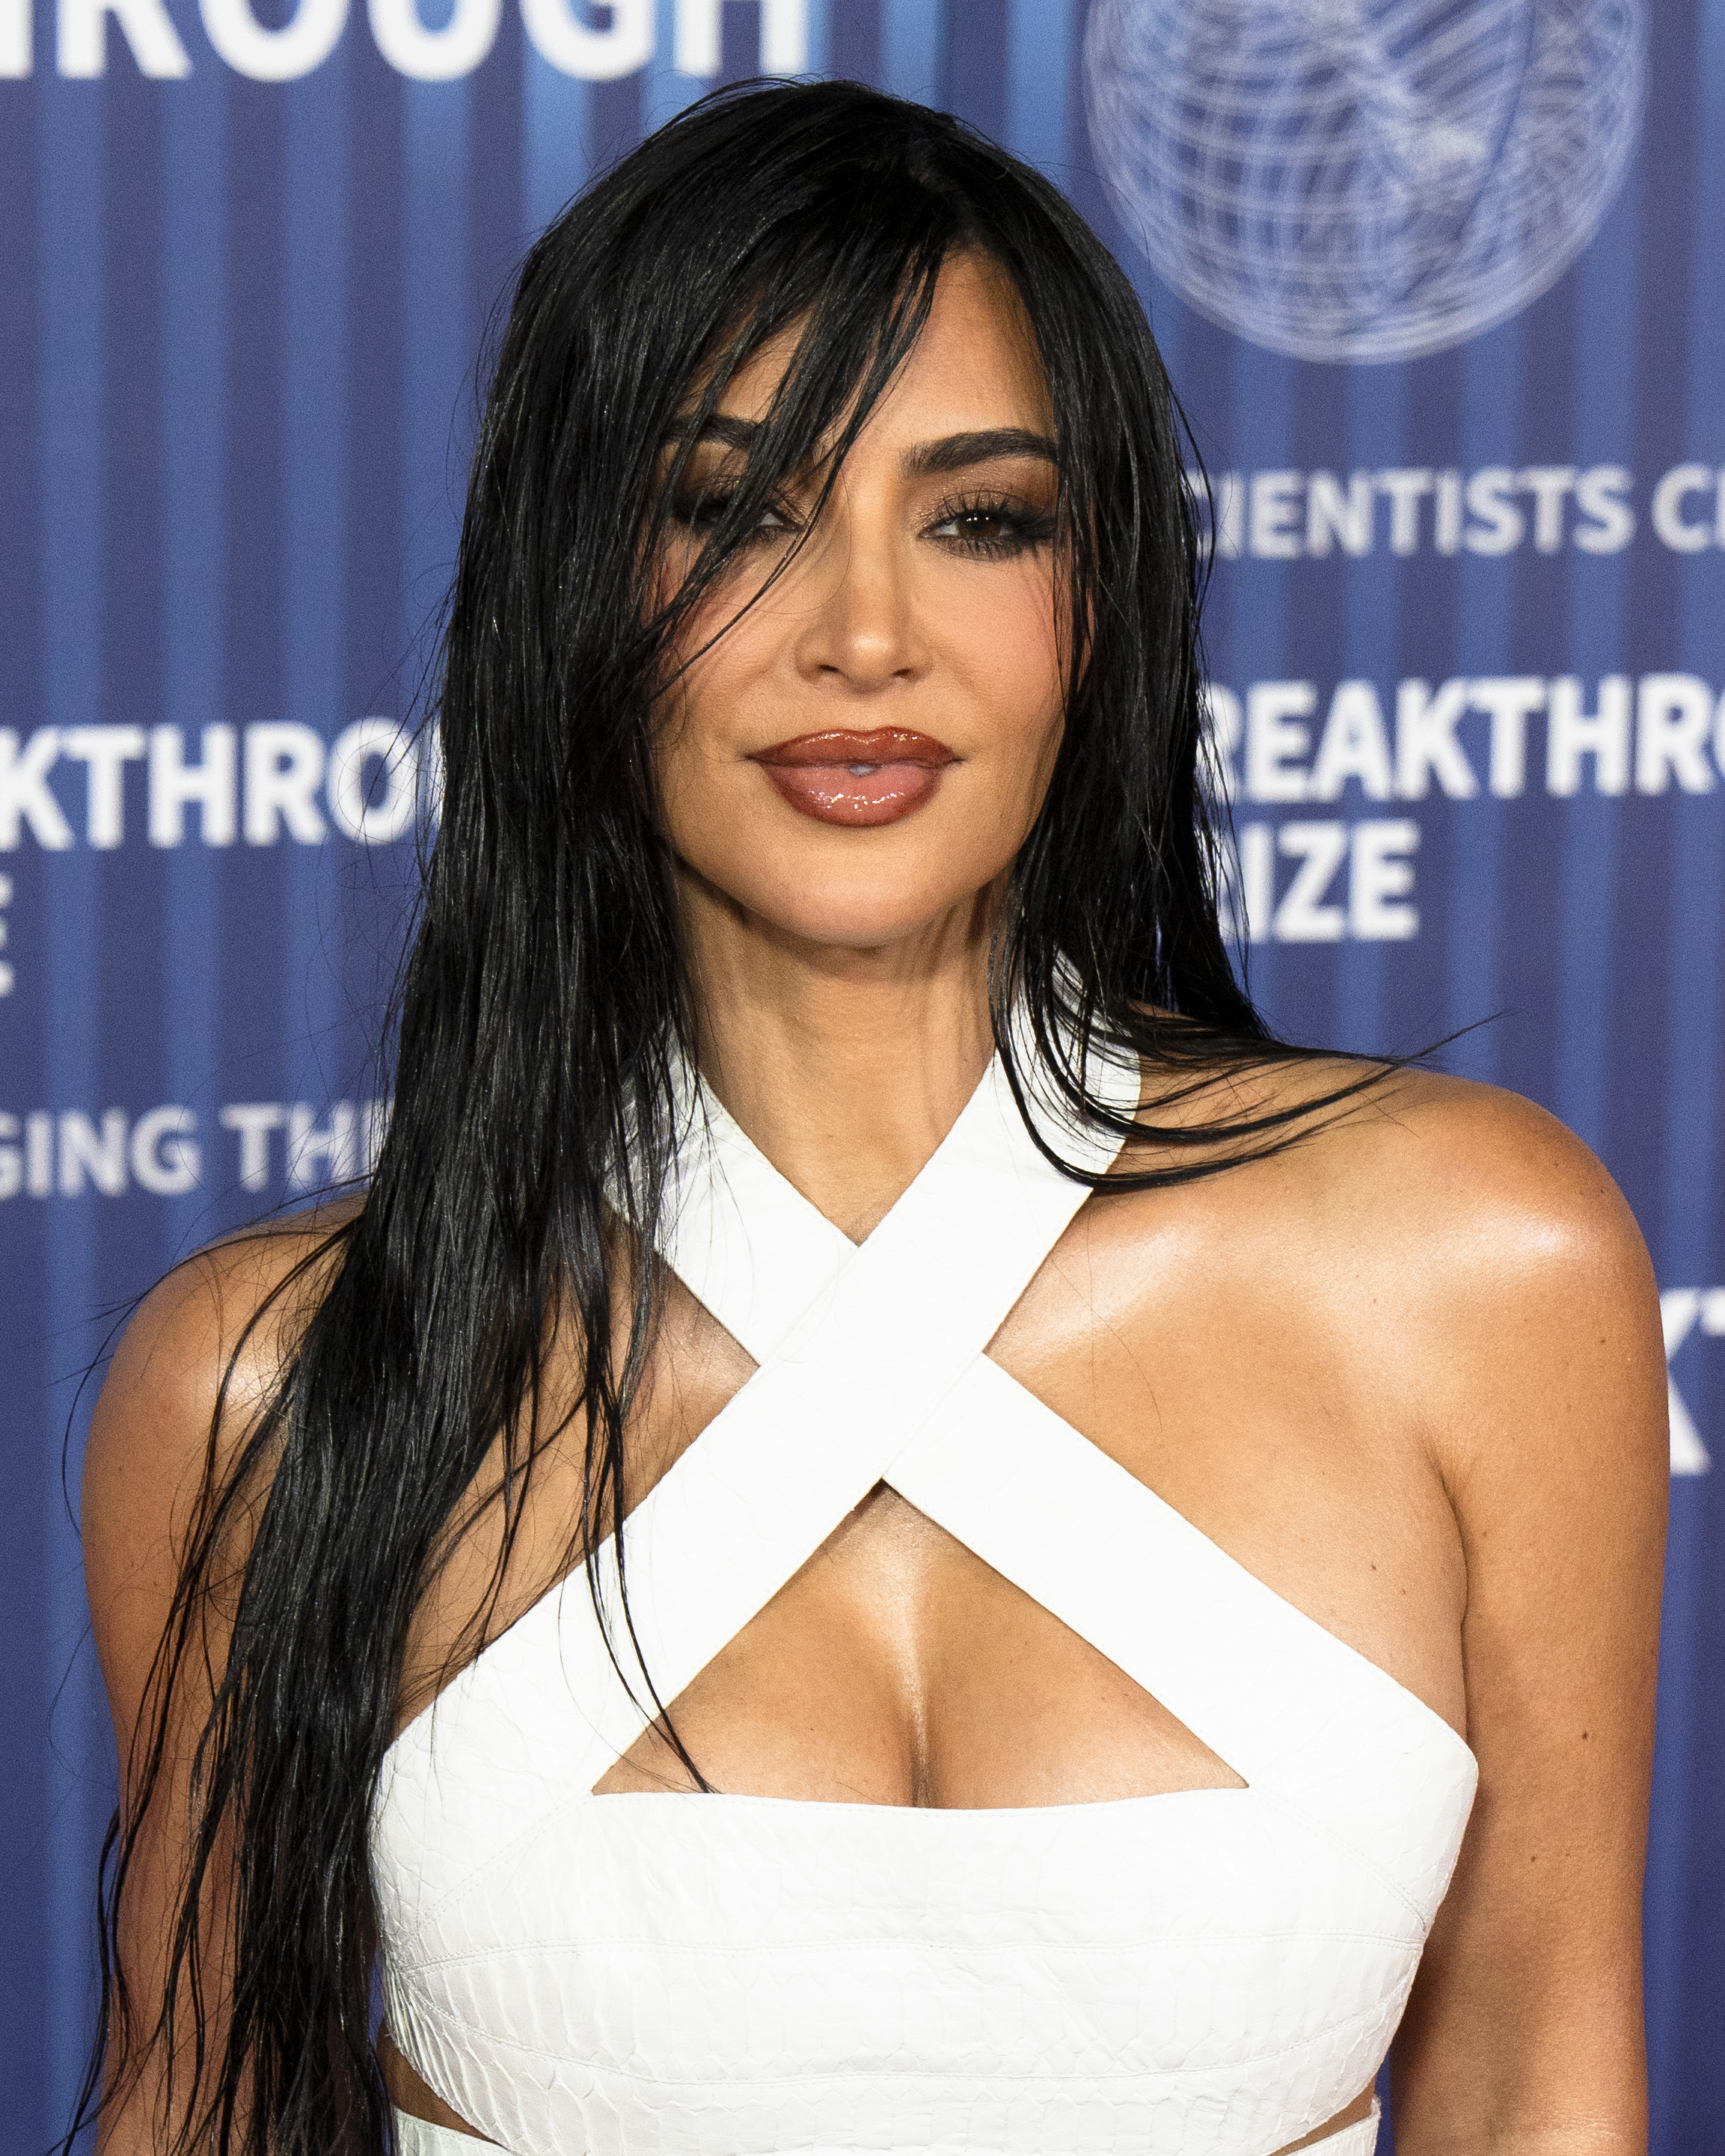 Kim Kardashian wearing a white crisscross top at the Breakthrough Prize ceremony